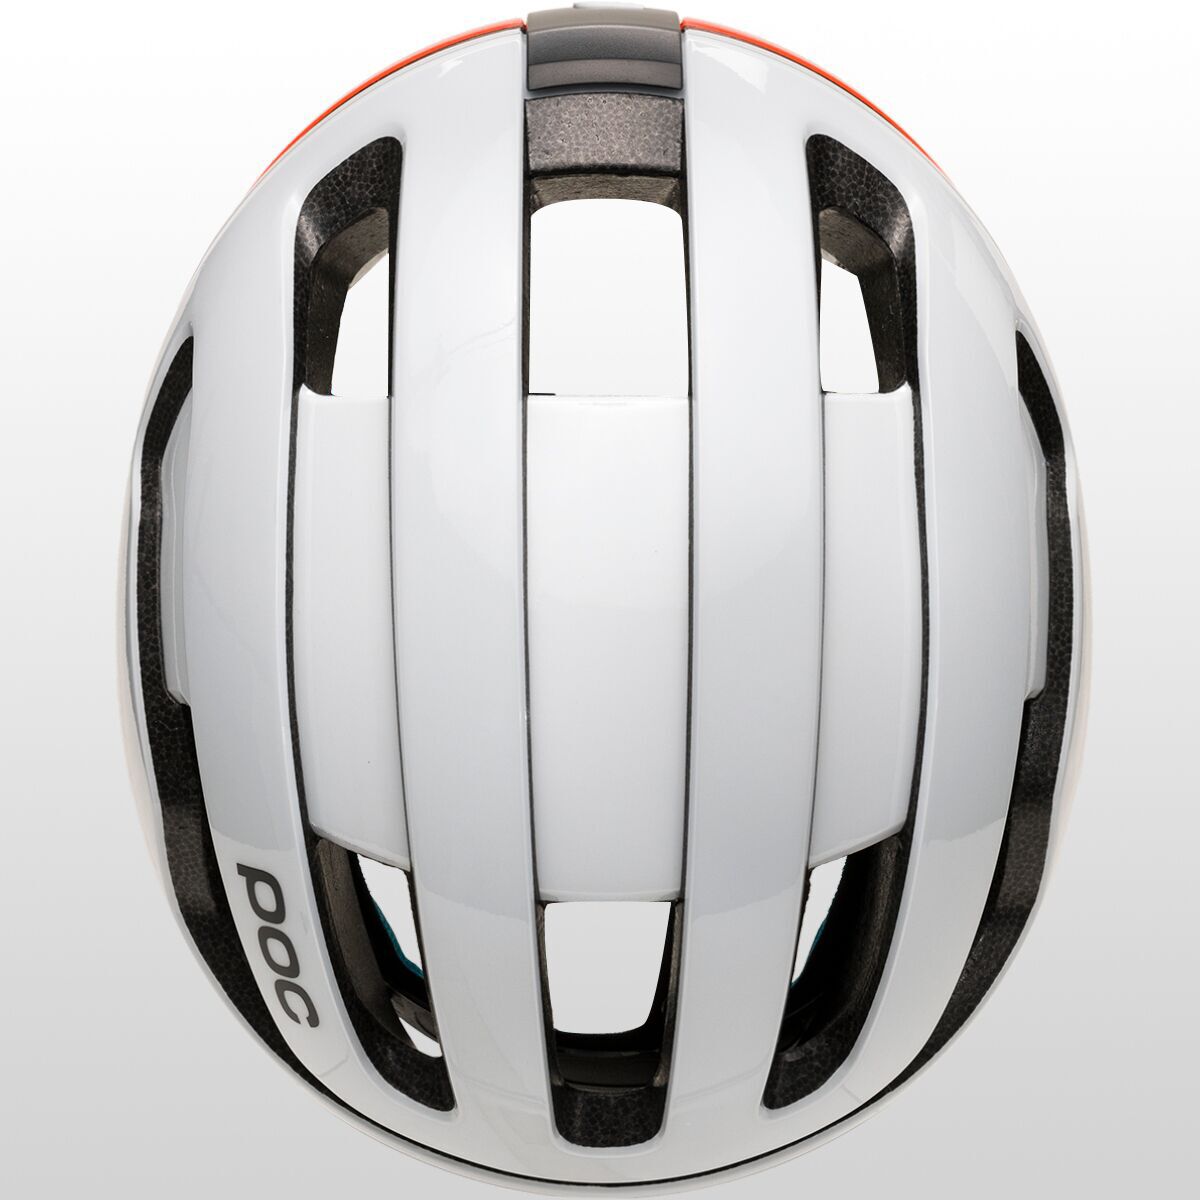 POC Omne Air Resistance SPIN, un casco multidisciplinar para